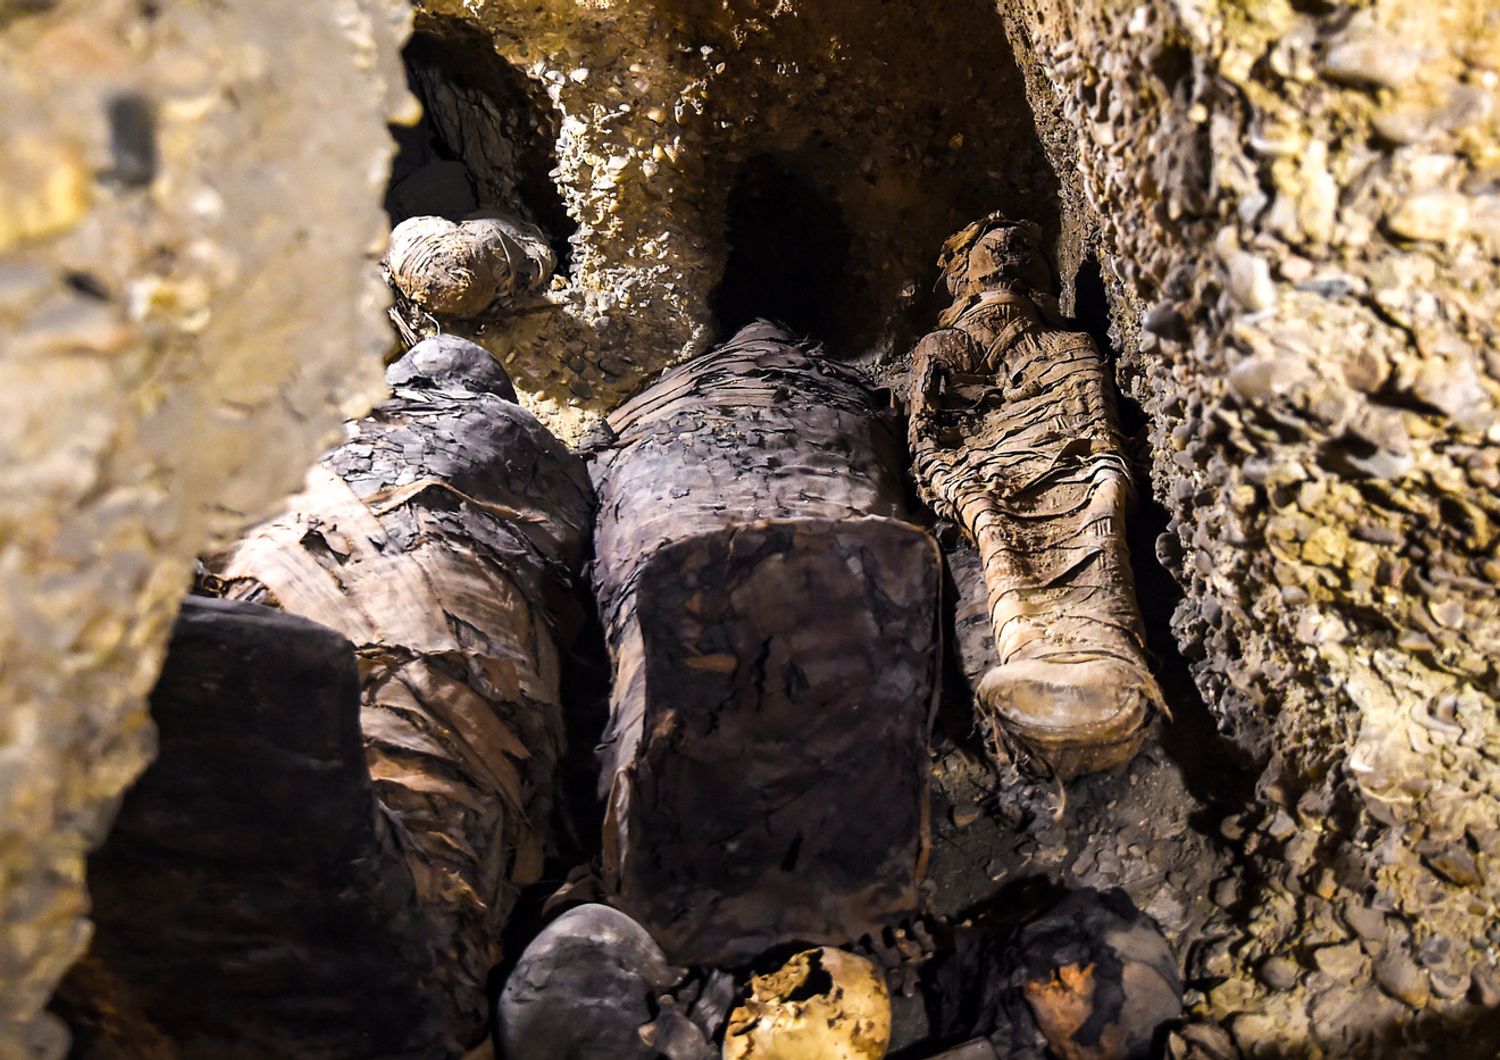 &nbsp;Alcune delle 40 mummie scoperte a Minya, Egitto, il 3 febbraio 2019